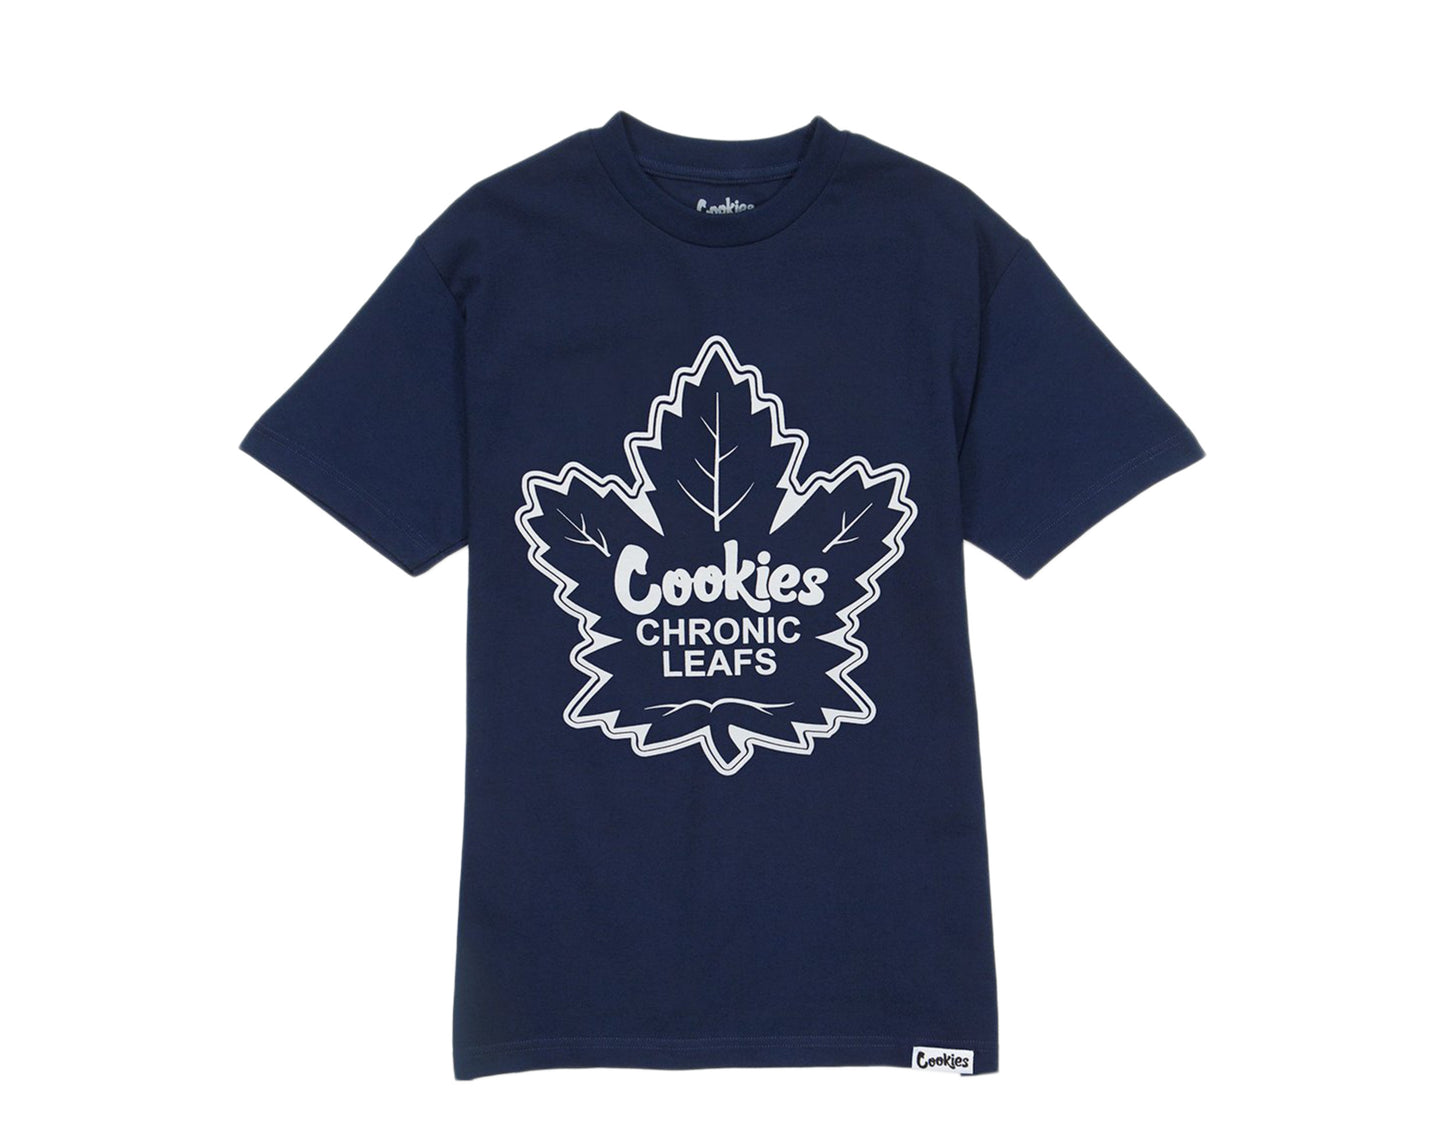 Cookies Chronic Leafs Navy Blue Men's Tee Shirt 1545T4189-NAV